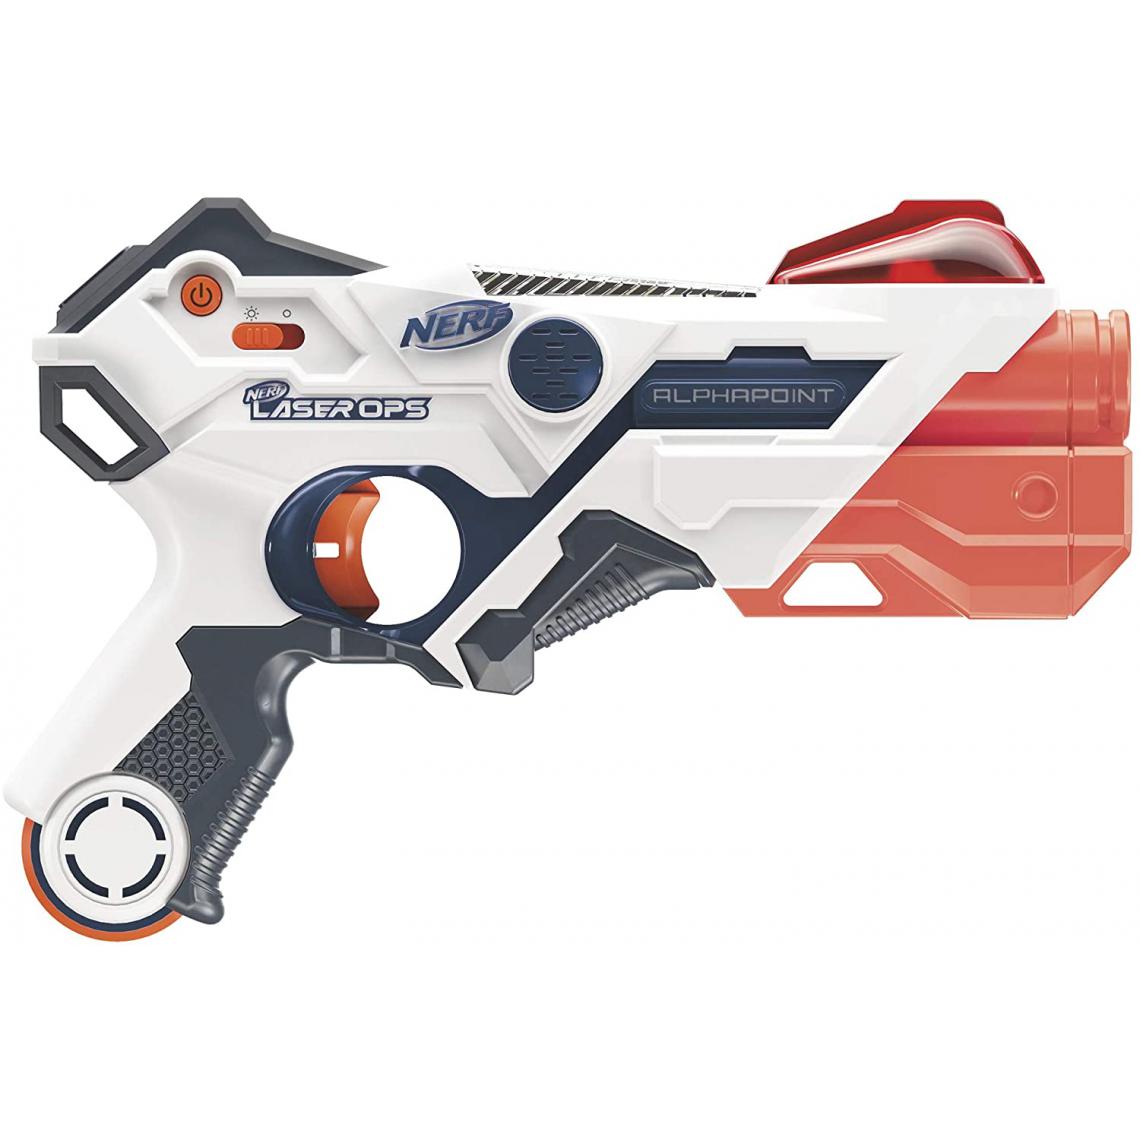 Nerf - pistolet laser Ops Alphapoint blanc orange - Jeux d'adresse